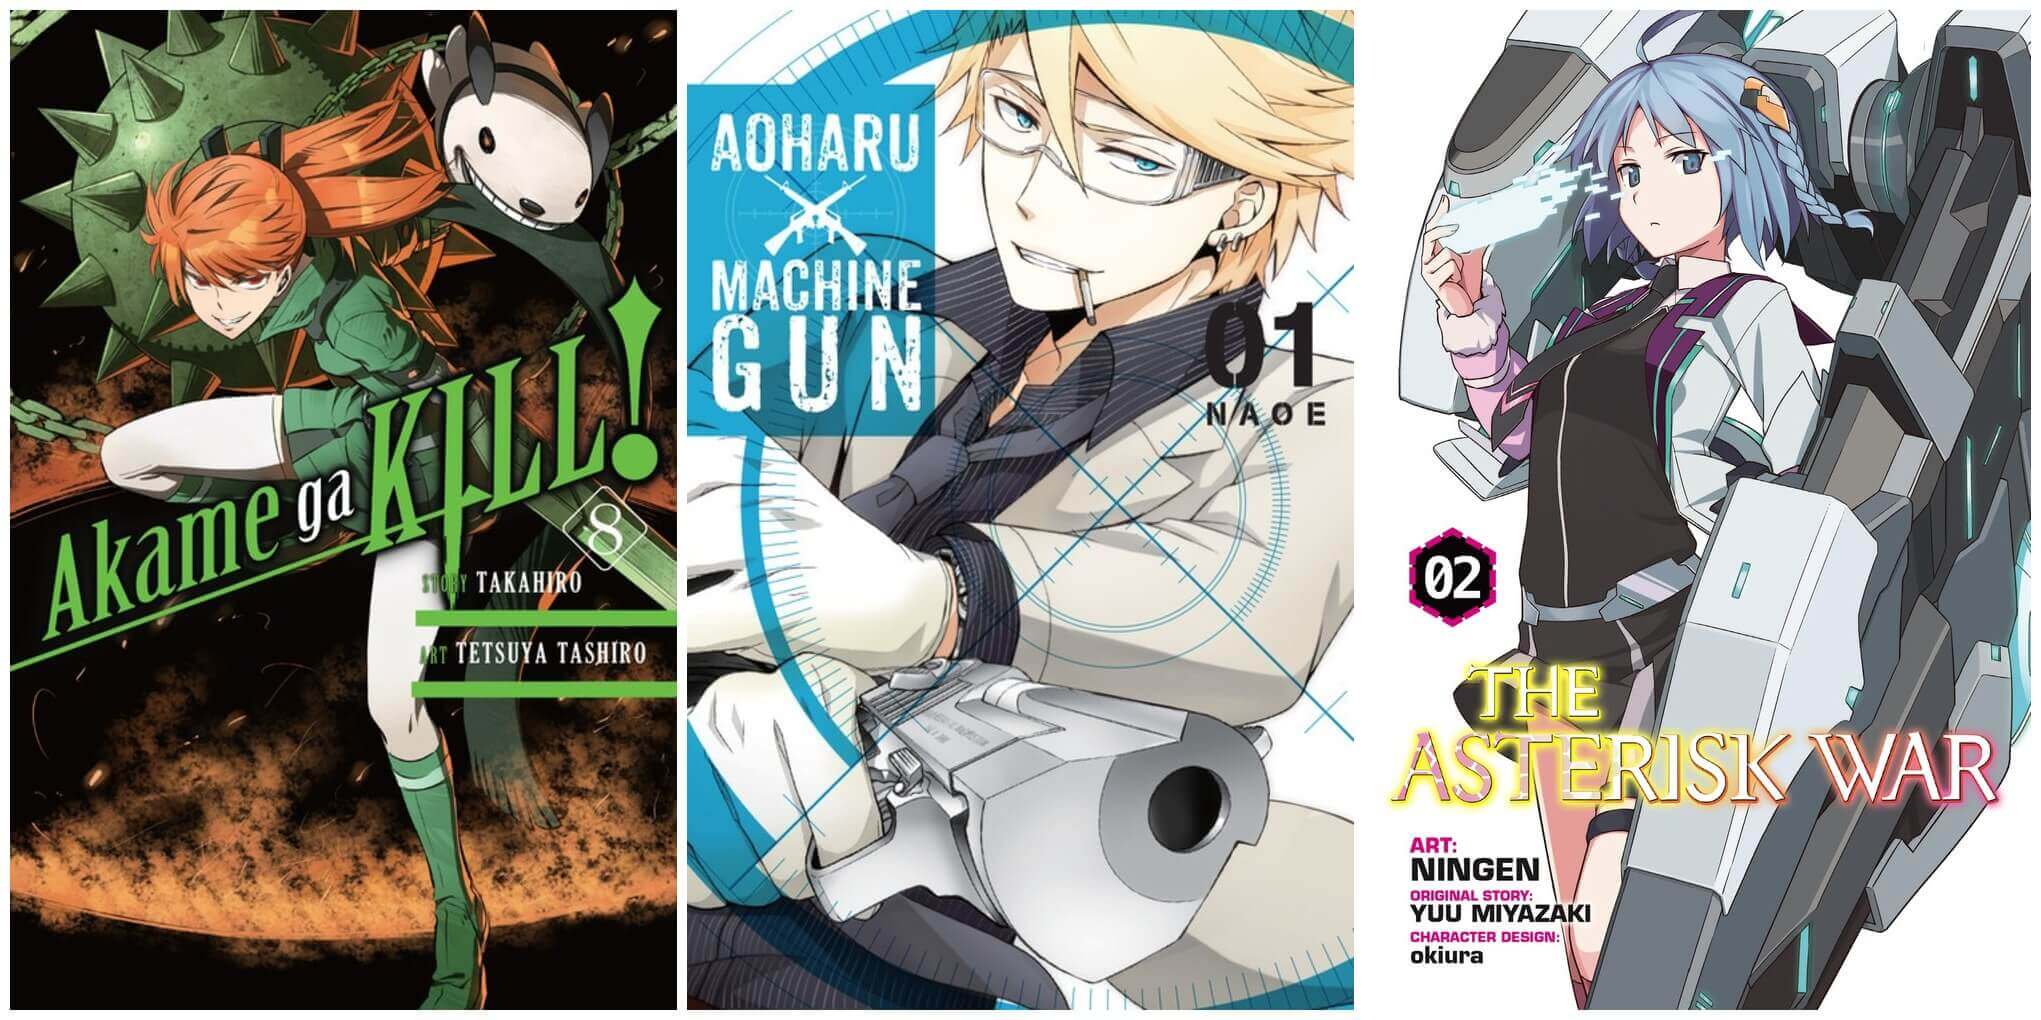 October 2016 Manga Releases Covers for Akame ga Kill, Aoharu X Machinegun, and The Asterisk War.